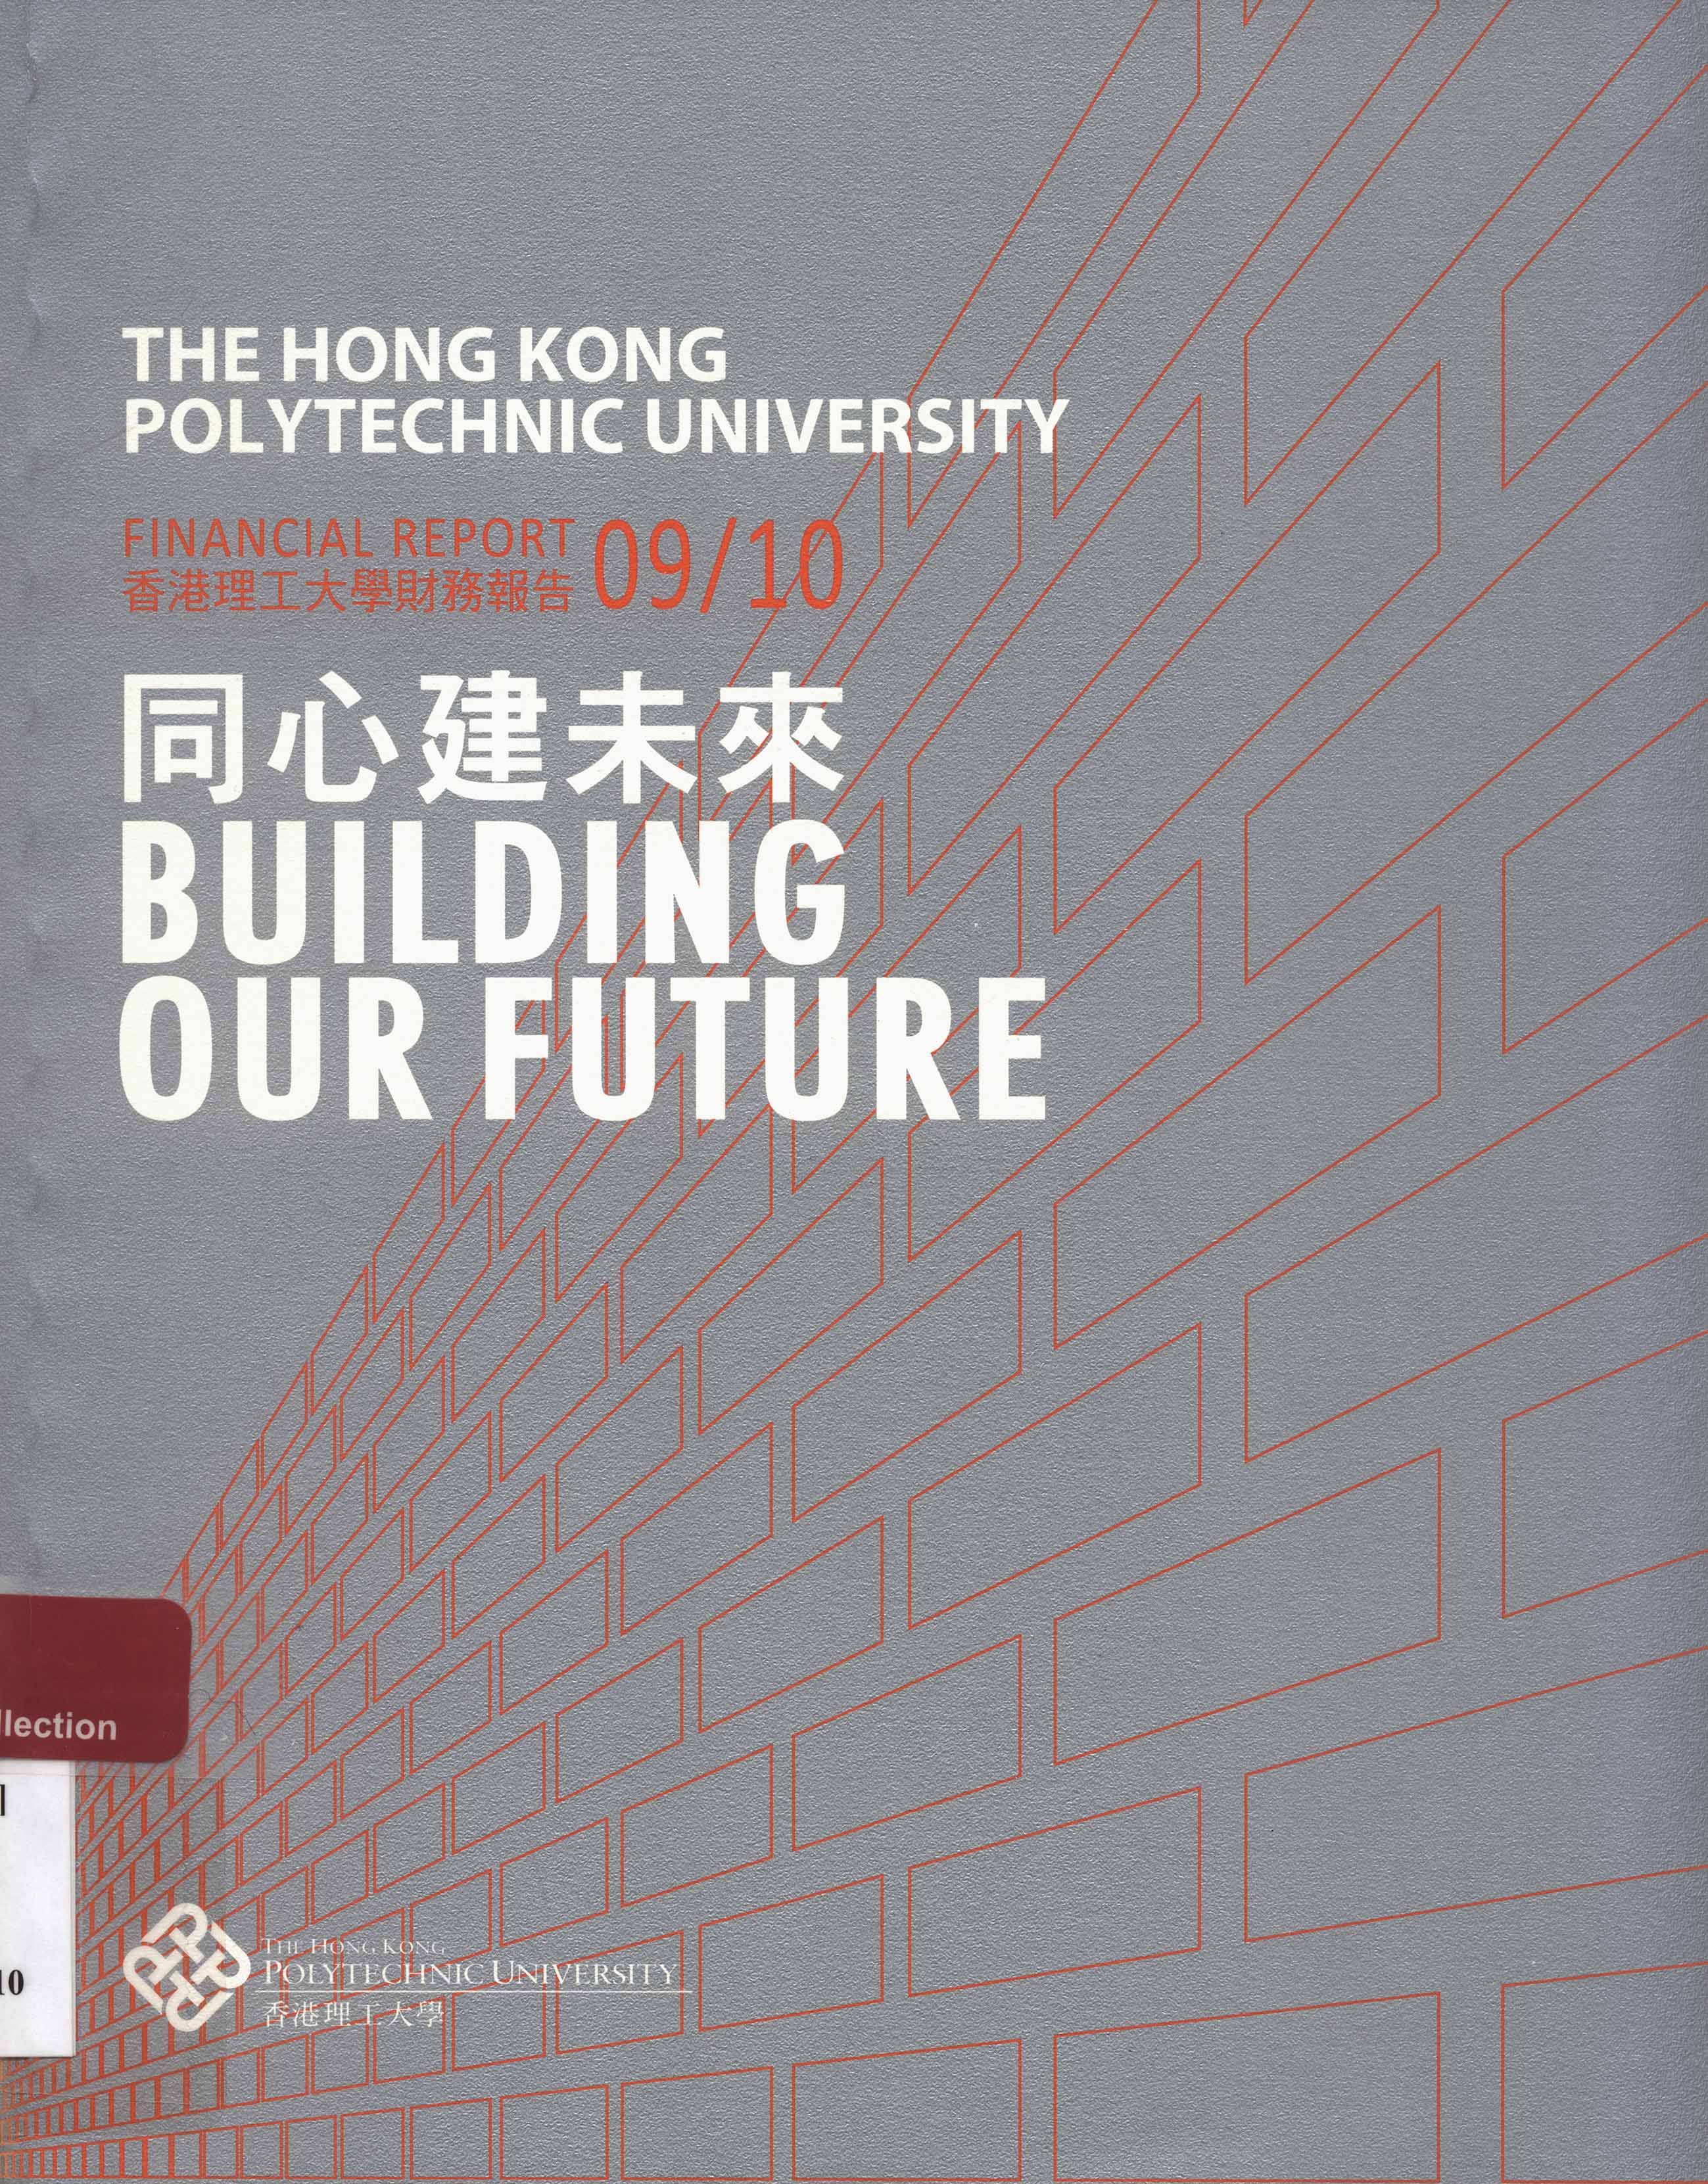 Hong Kong Polytechnic University Financial report 09/10